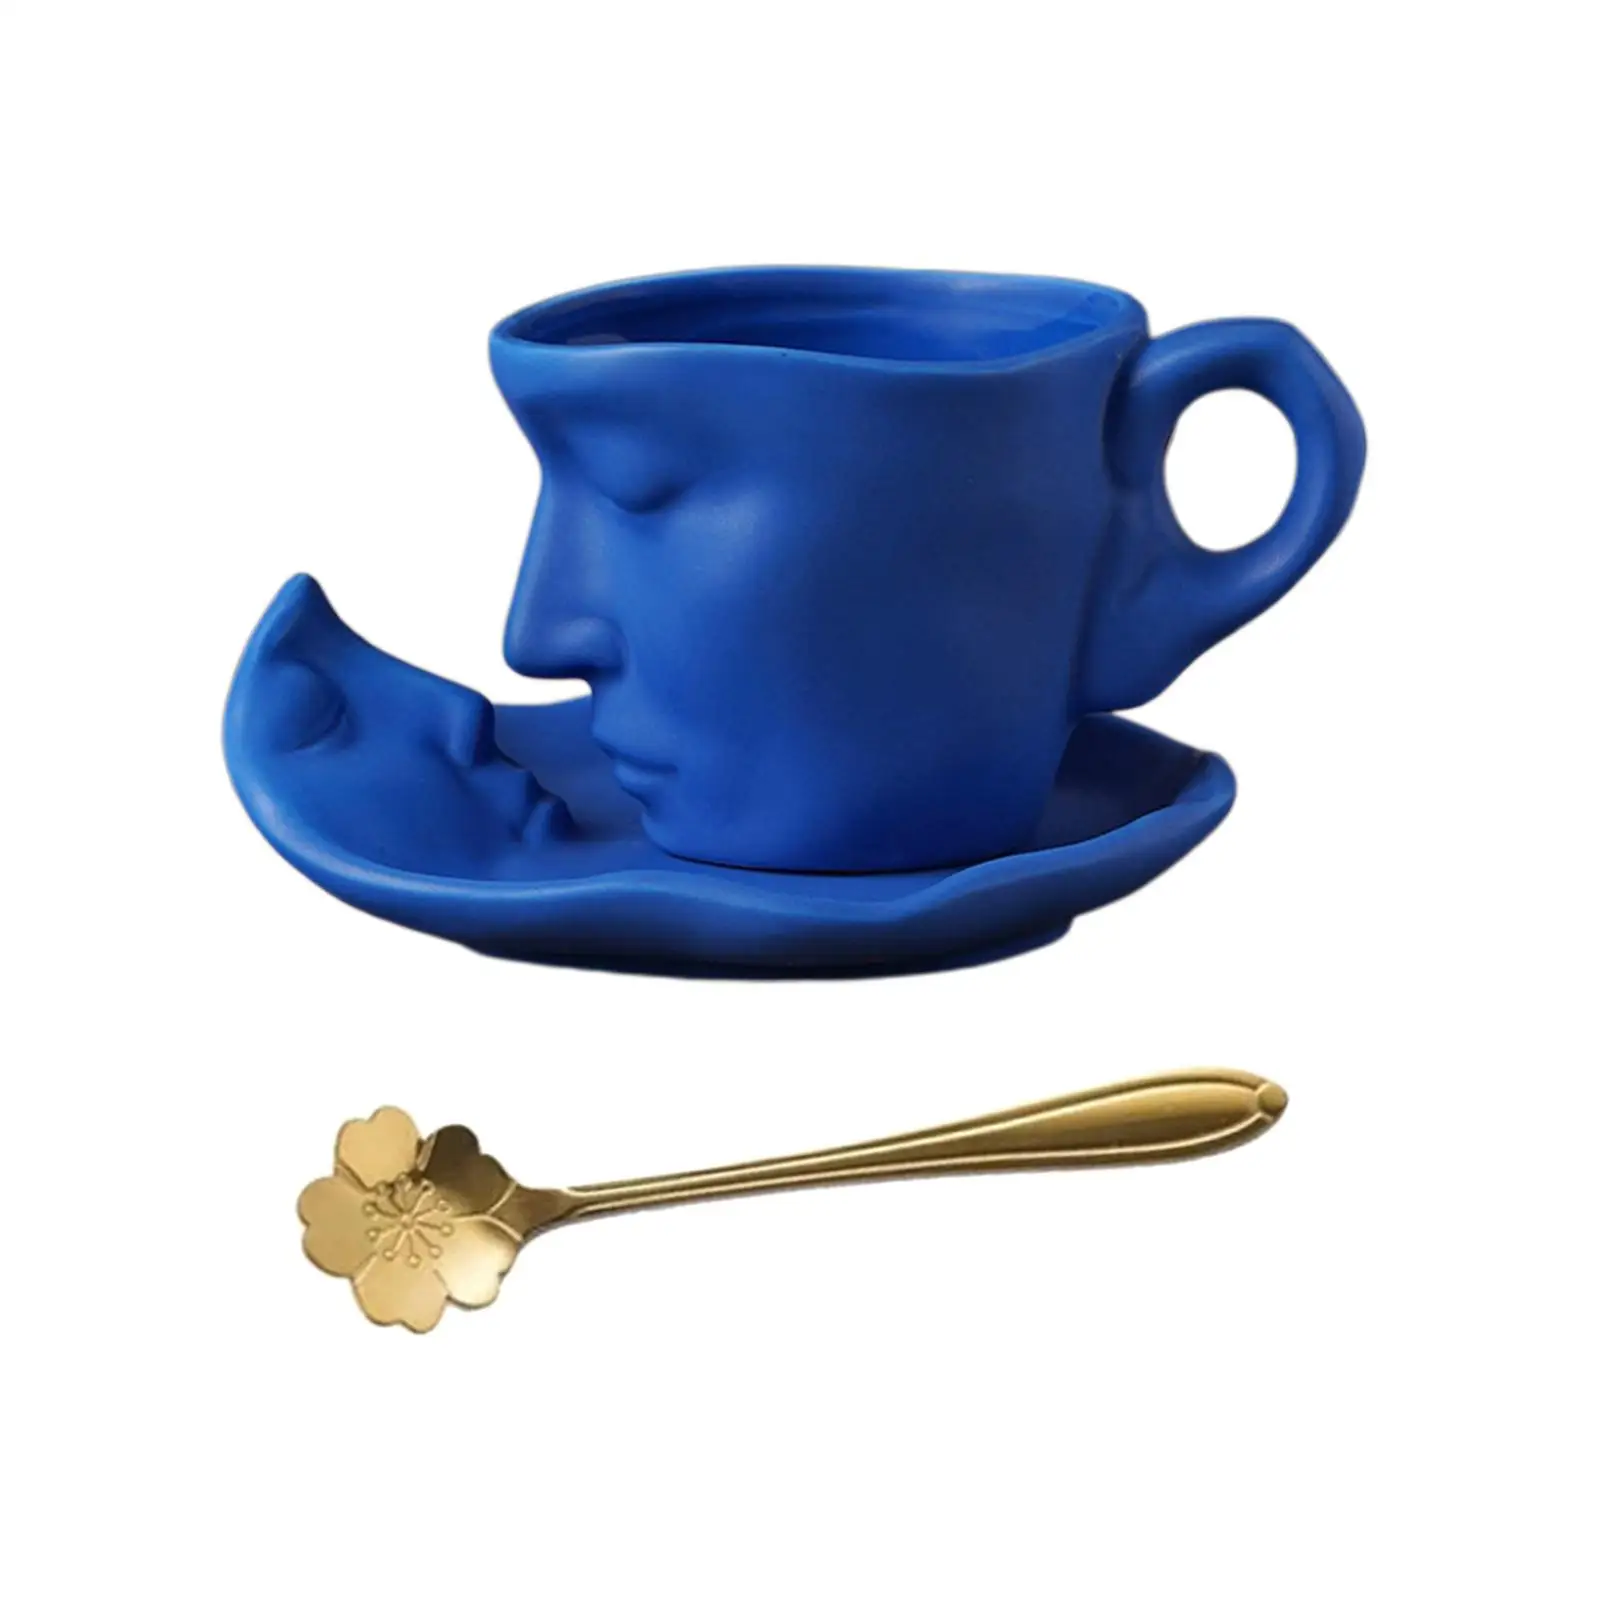 3D Human Face Kissing Mug Novelty Morning Cup Tea Mugs Table Arts 260ml for